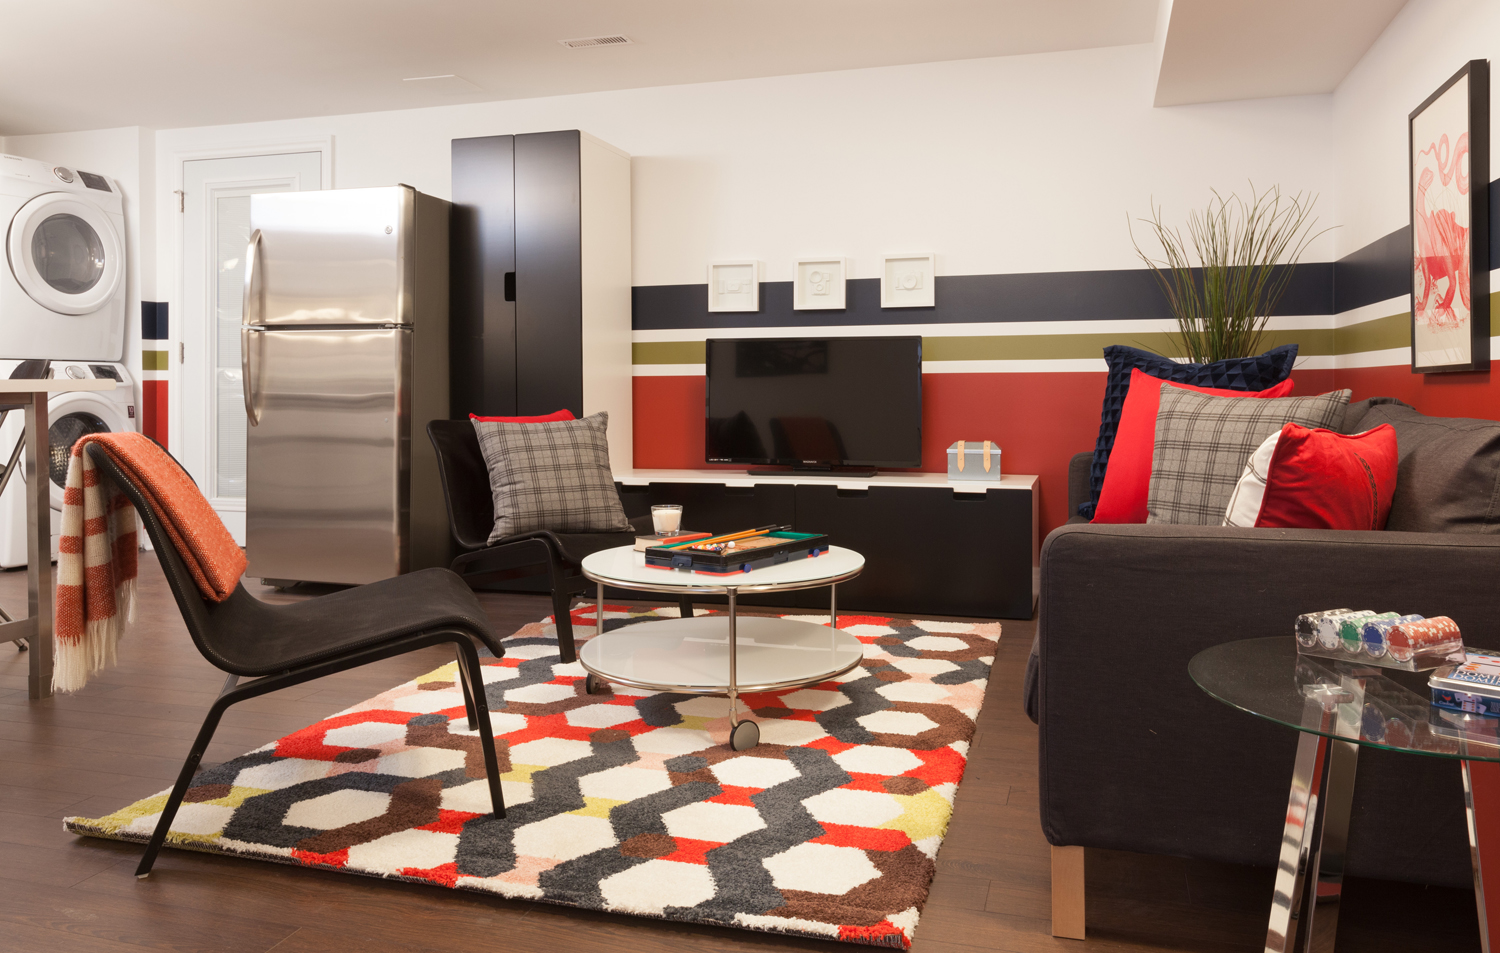 Basement apartment with geometric rug